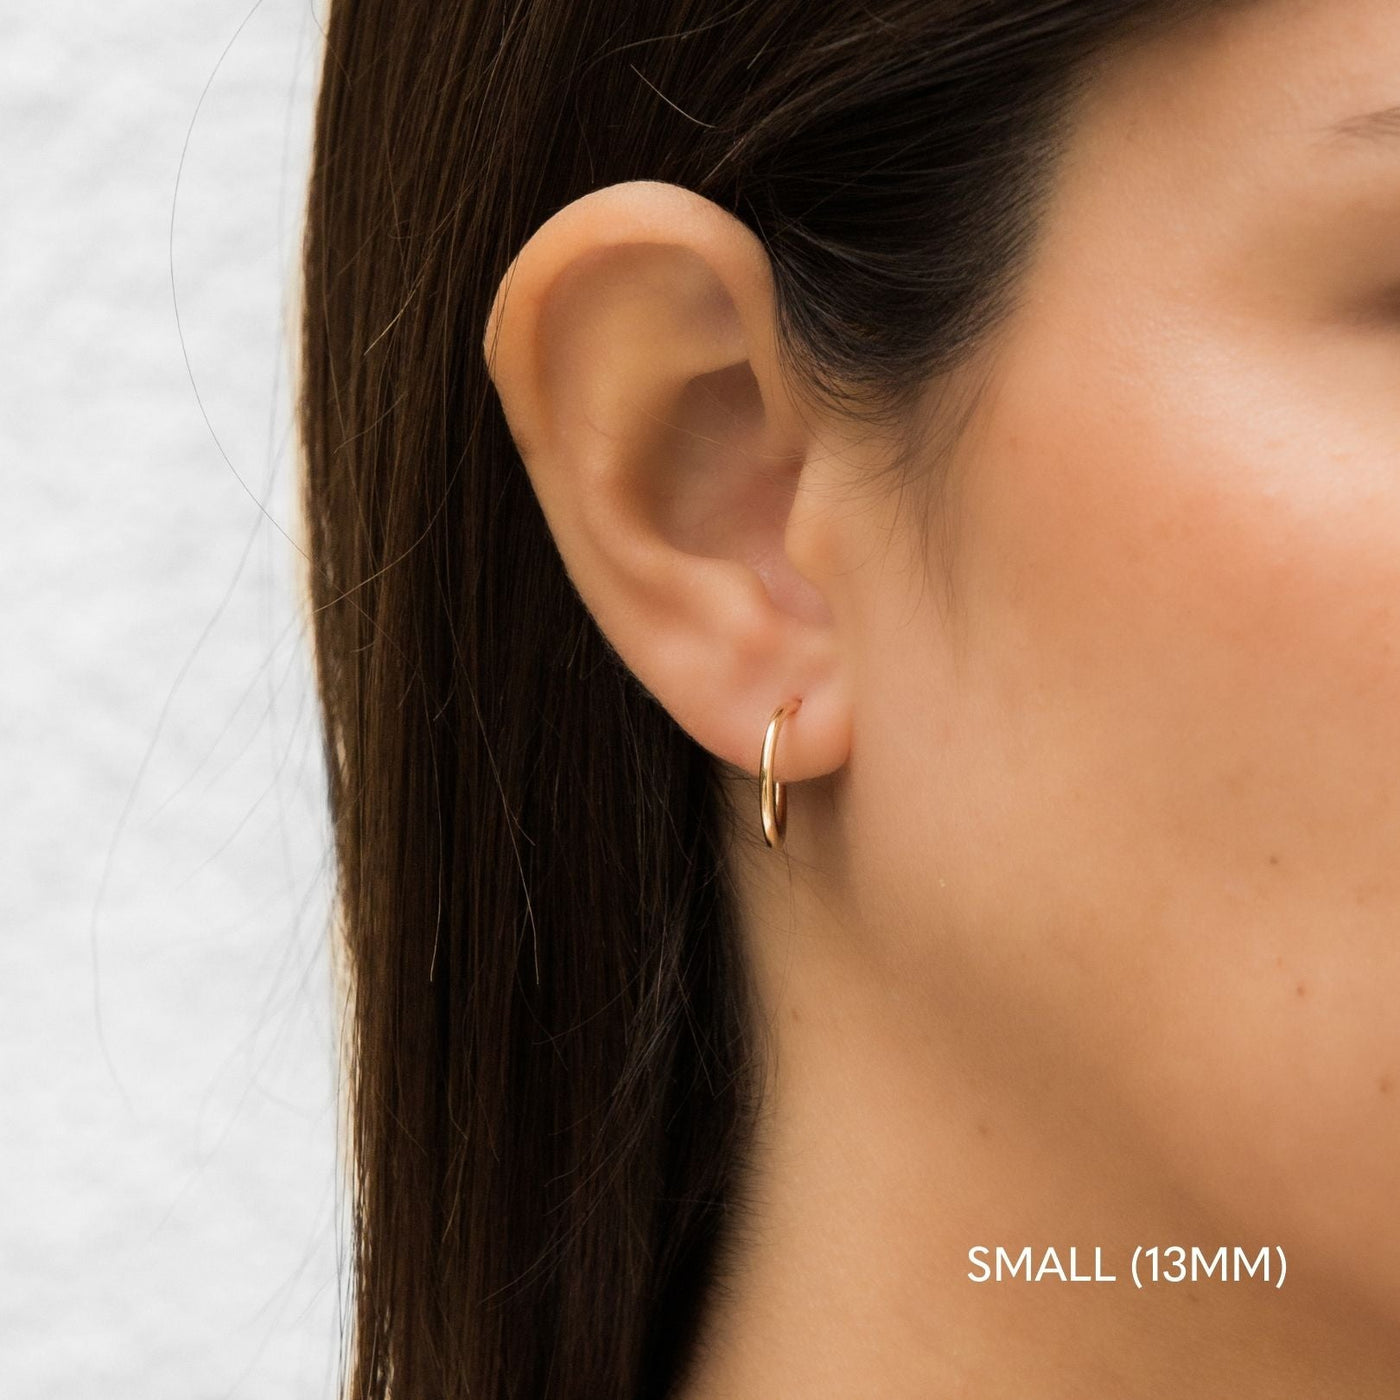 Buy 3 Pairs Sterling Silver Small Hoop Earrings | Cubic Zirconia Cuff  Earrings | 14K Gold Plated Hoop Earrings for Women | Cartilage Hoop Earrings  for Women Girls (10mm) at Amazon.in